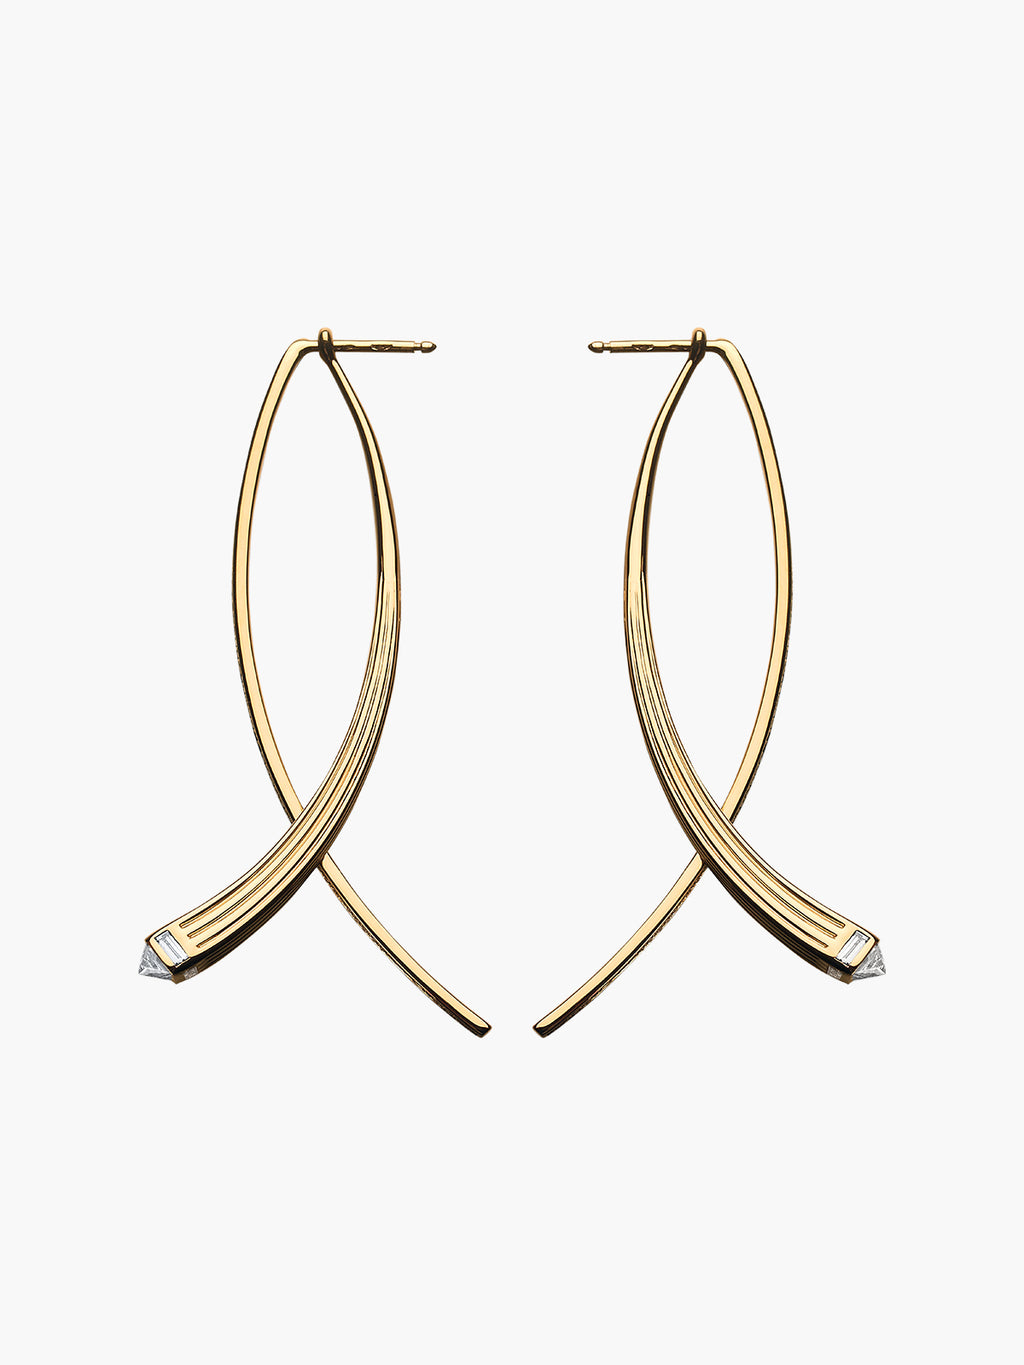 Fluted Double Arc Earrings - Fashionkind